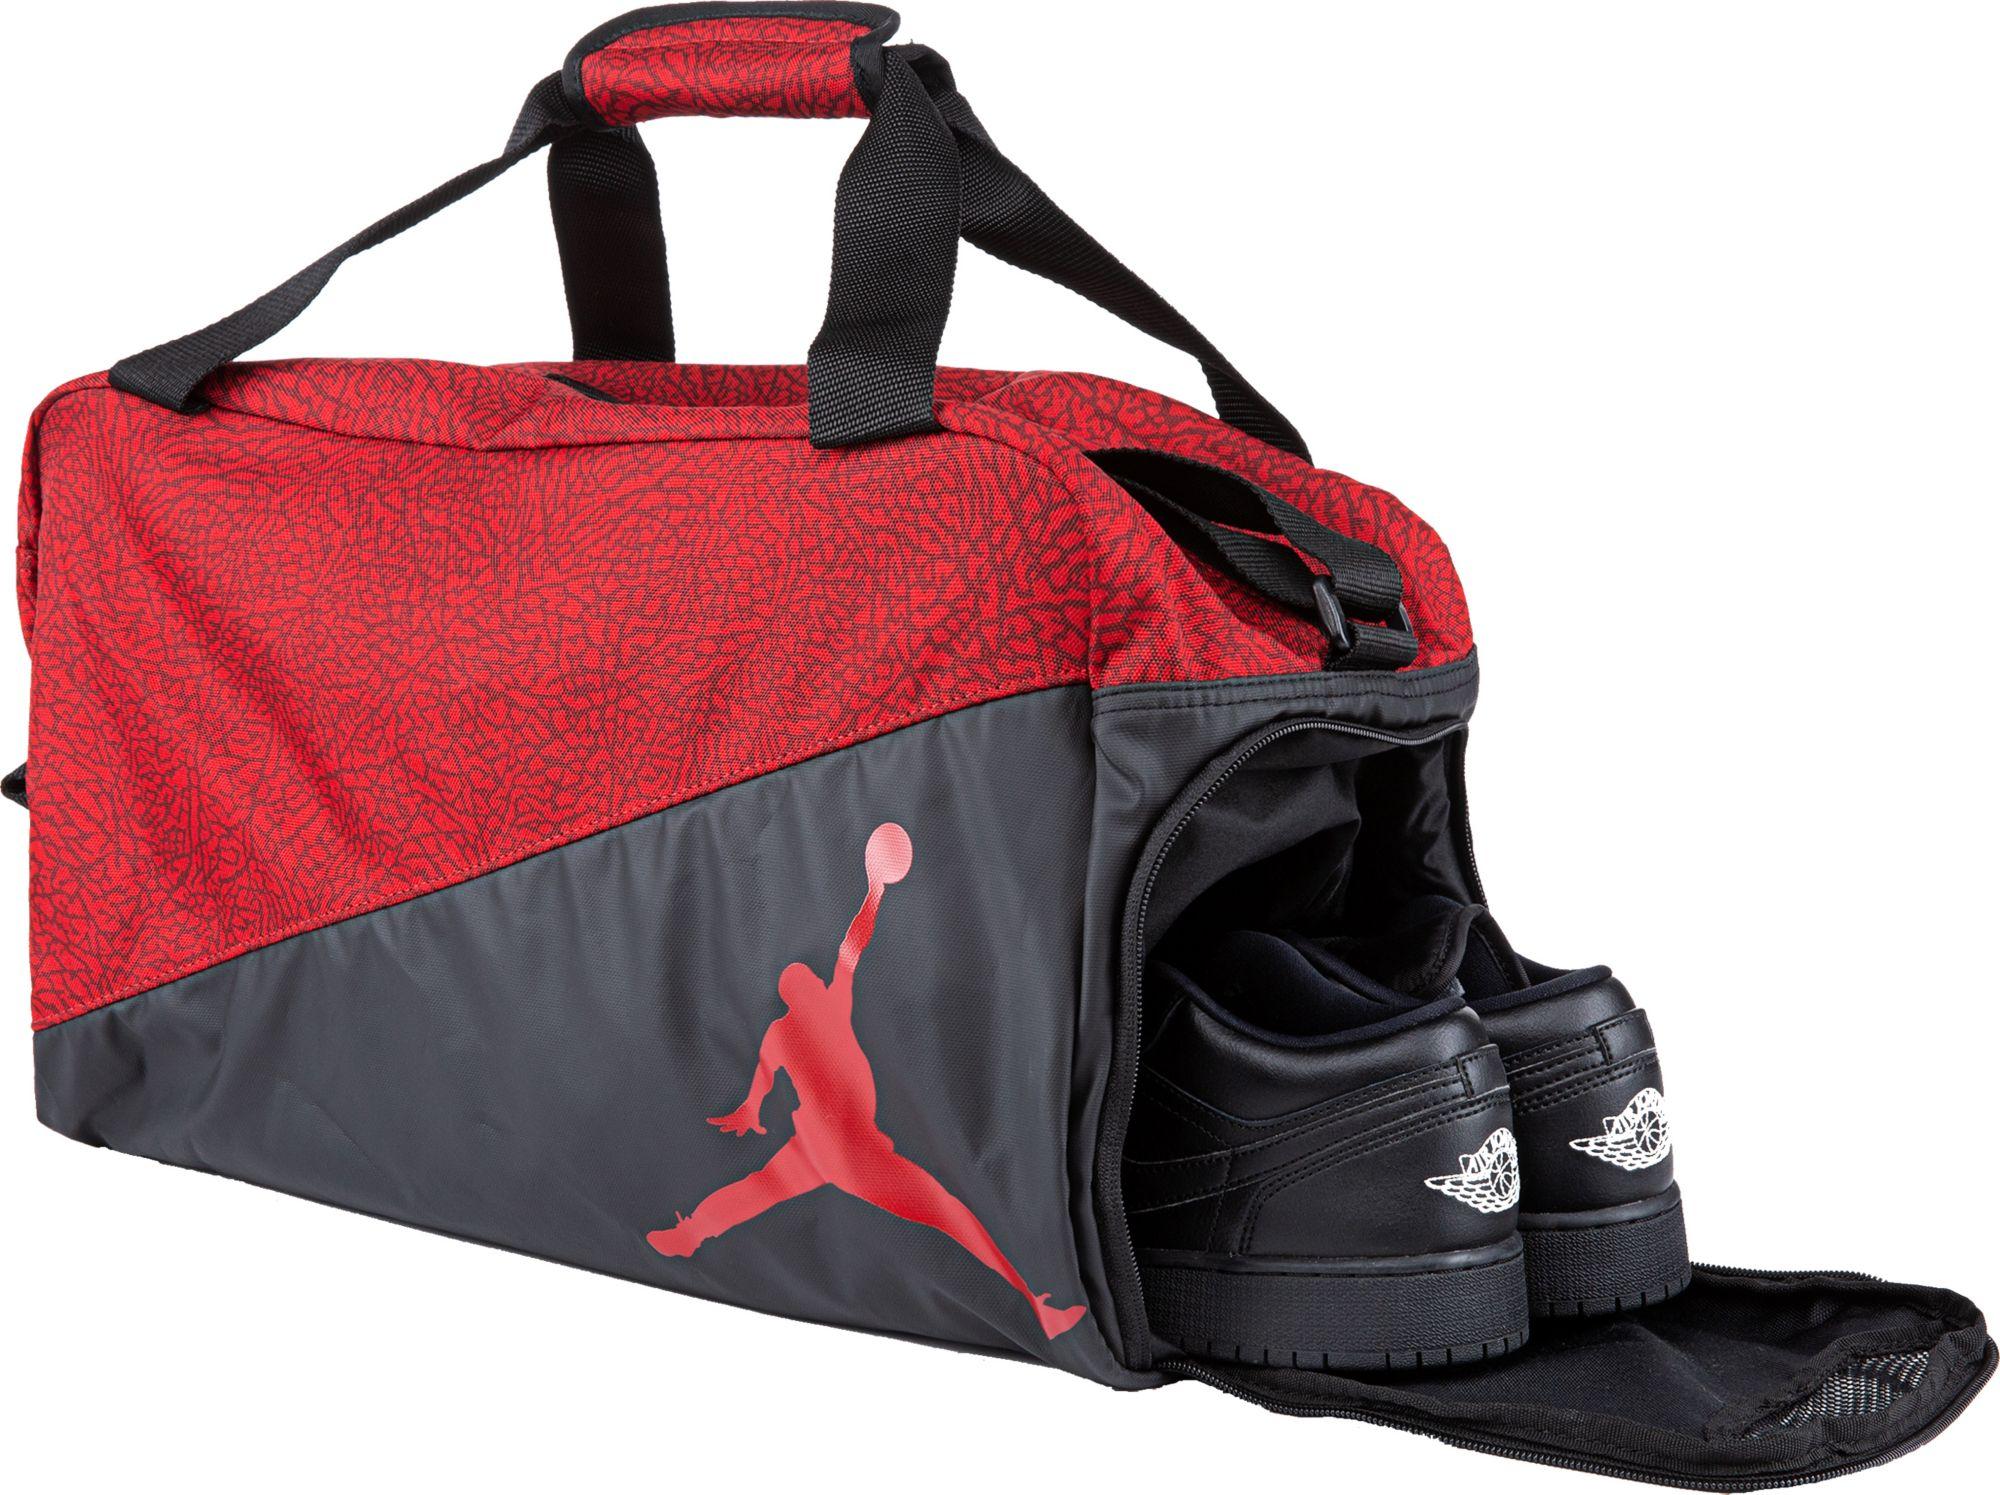 Nike Elemental Medium Duffle Bag in Red 